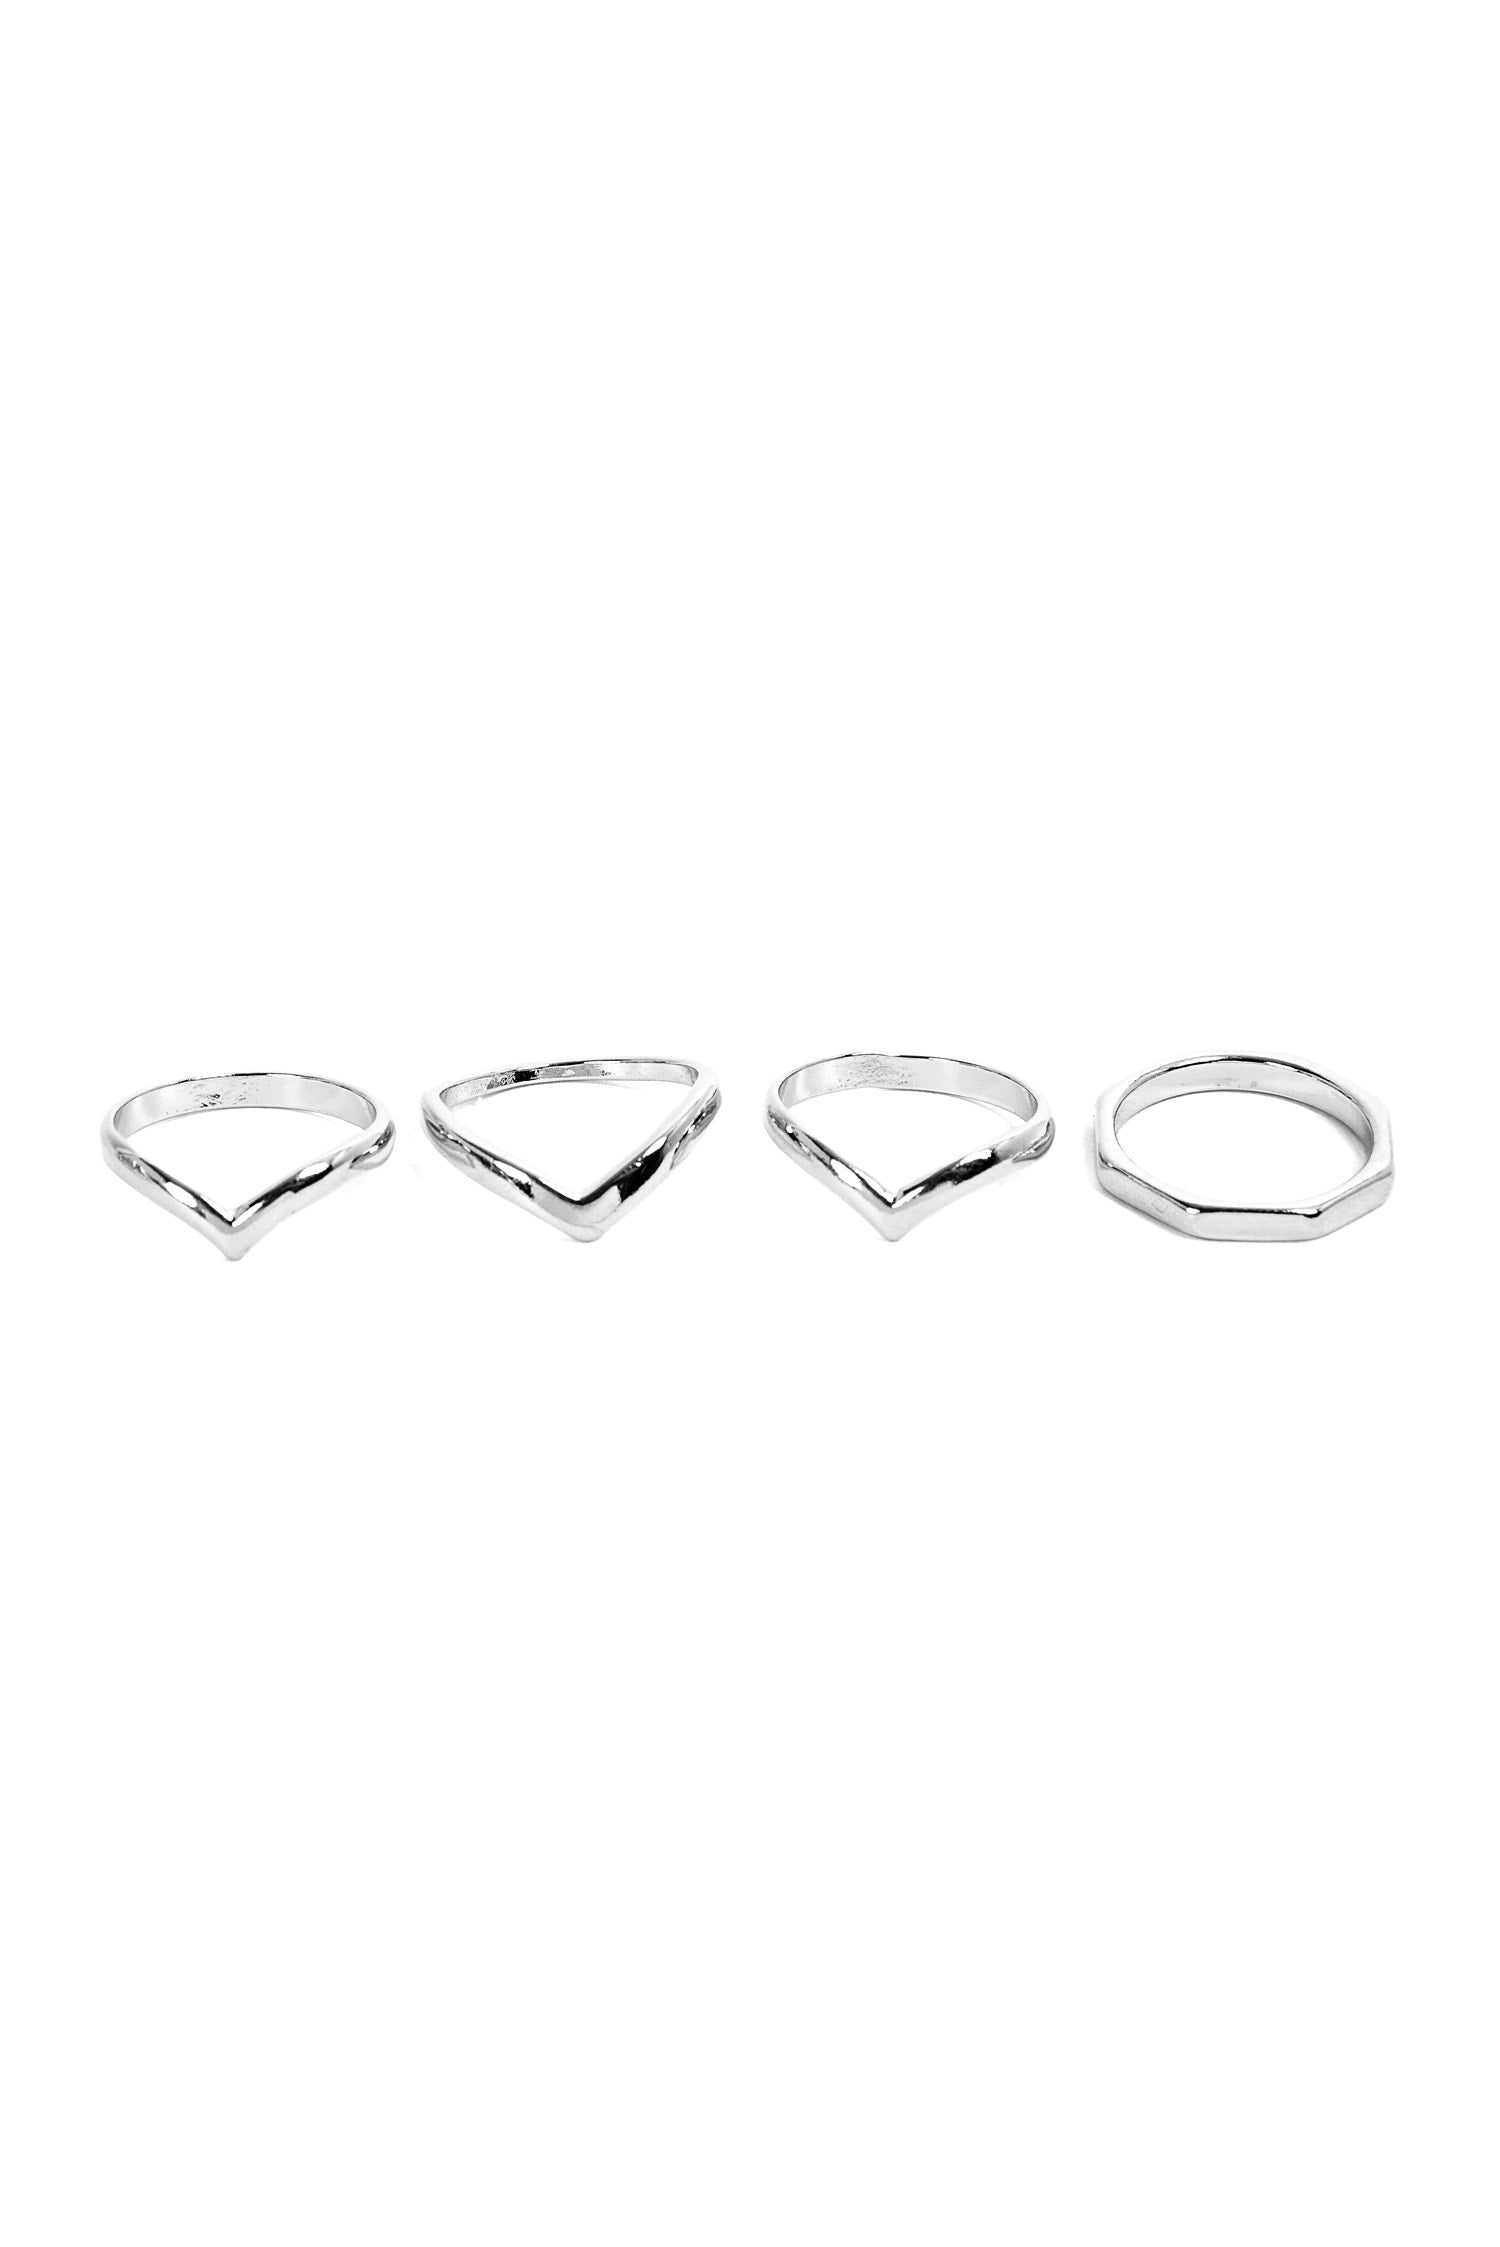 Statement Metal Ring Variety Pack